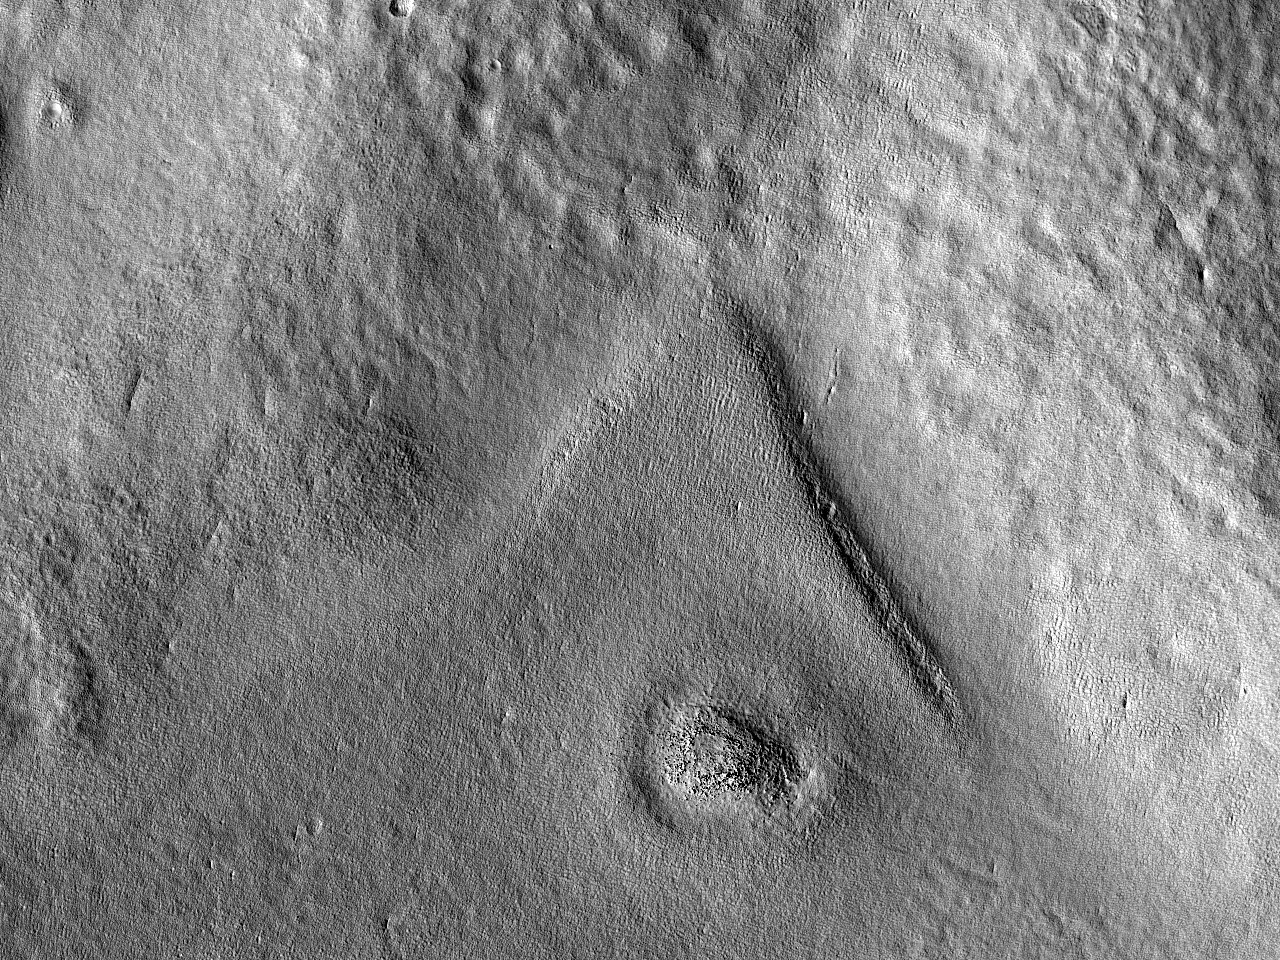 Kuzey Arcadia Planitia